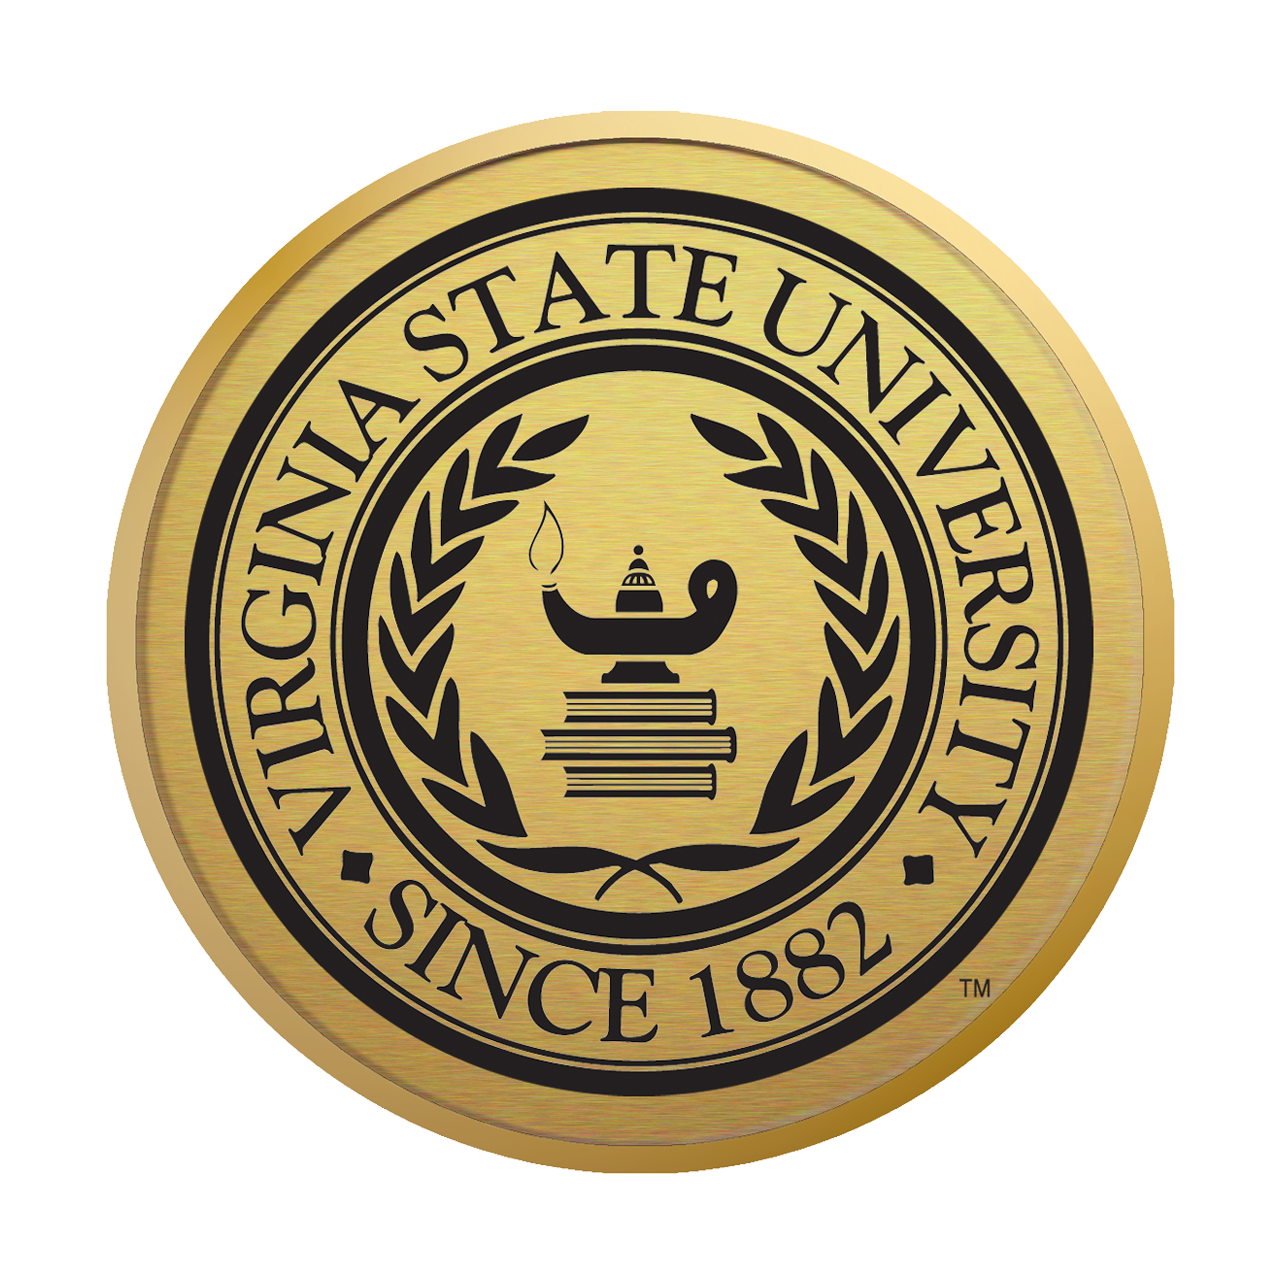 virginia state university logo